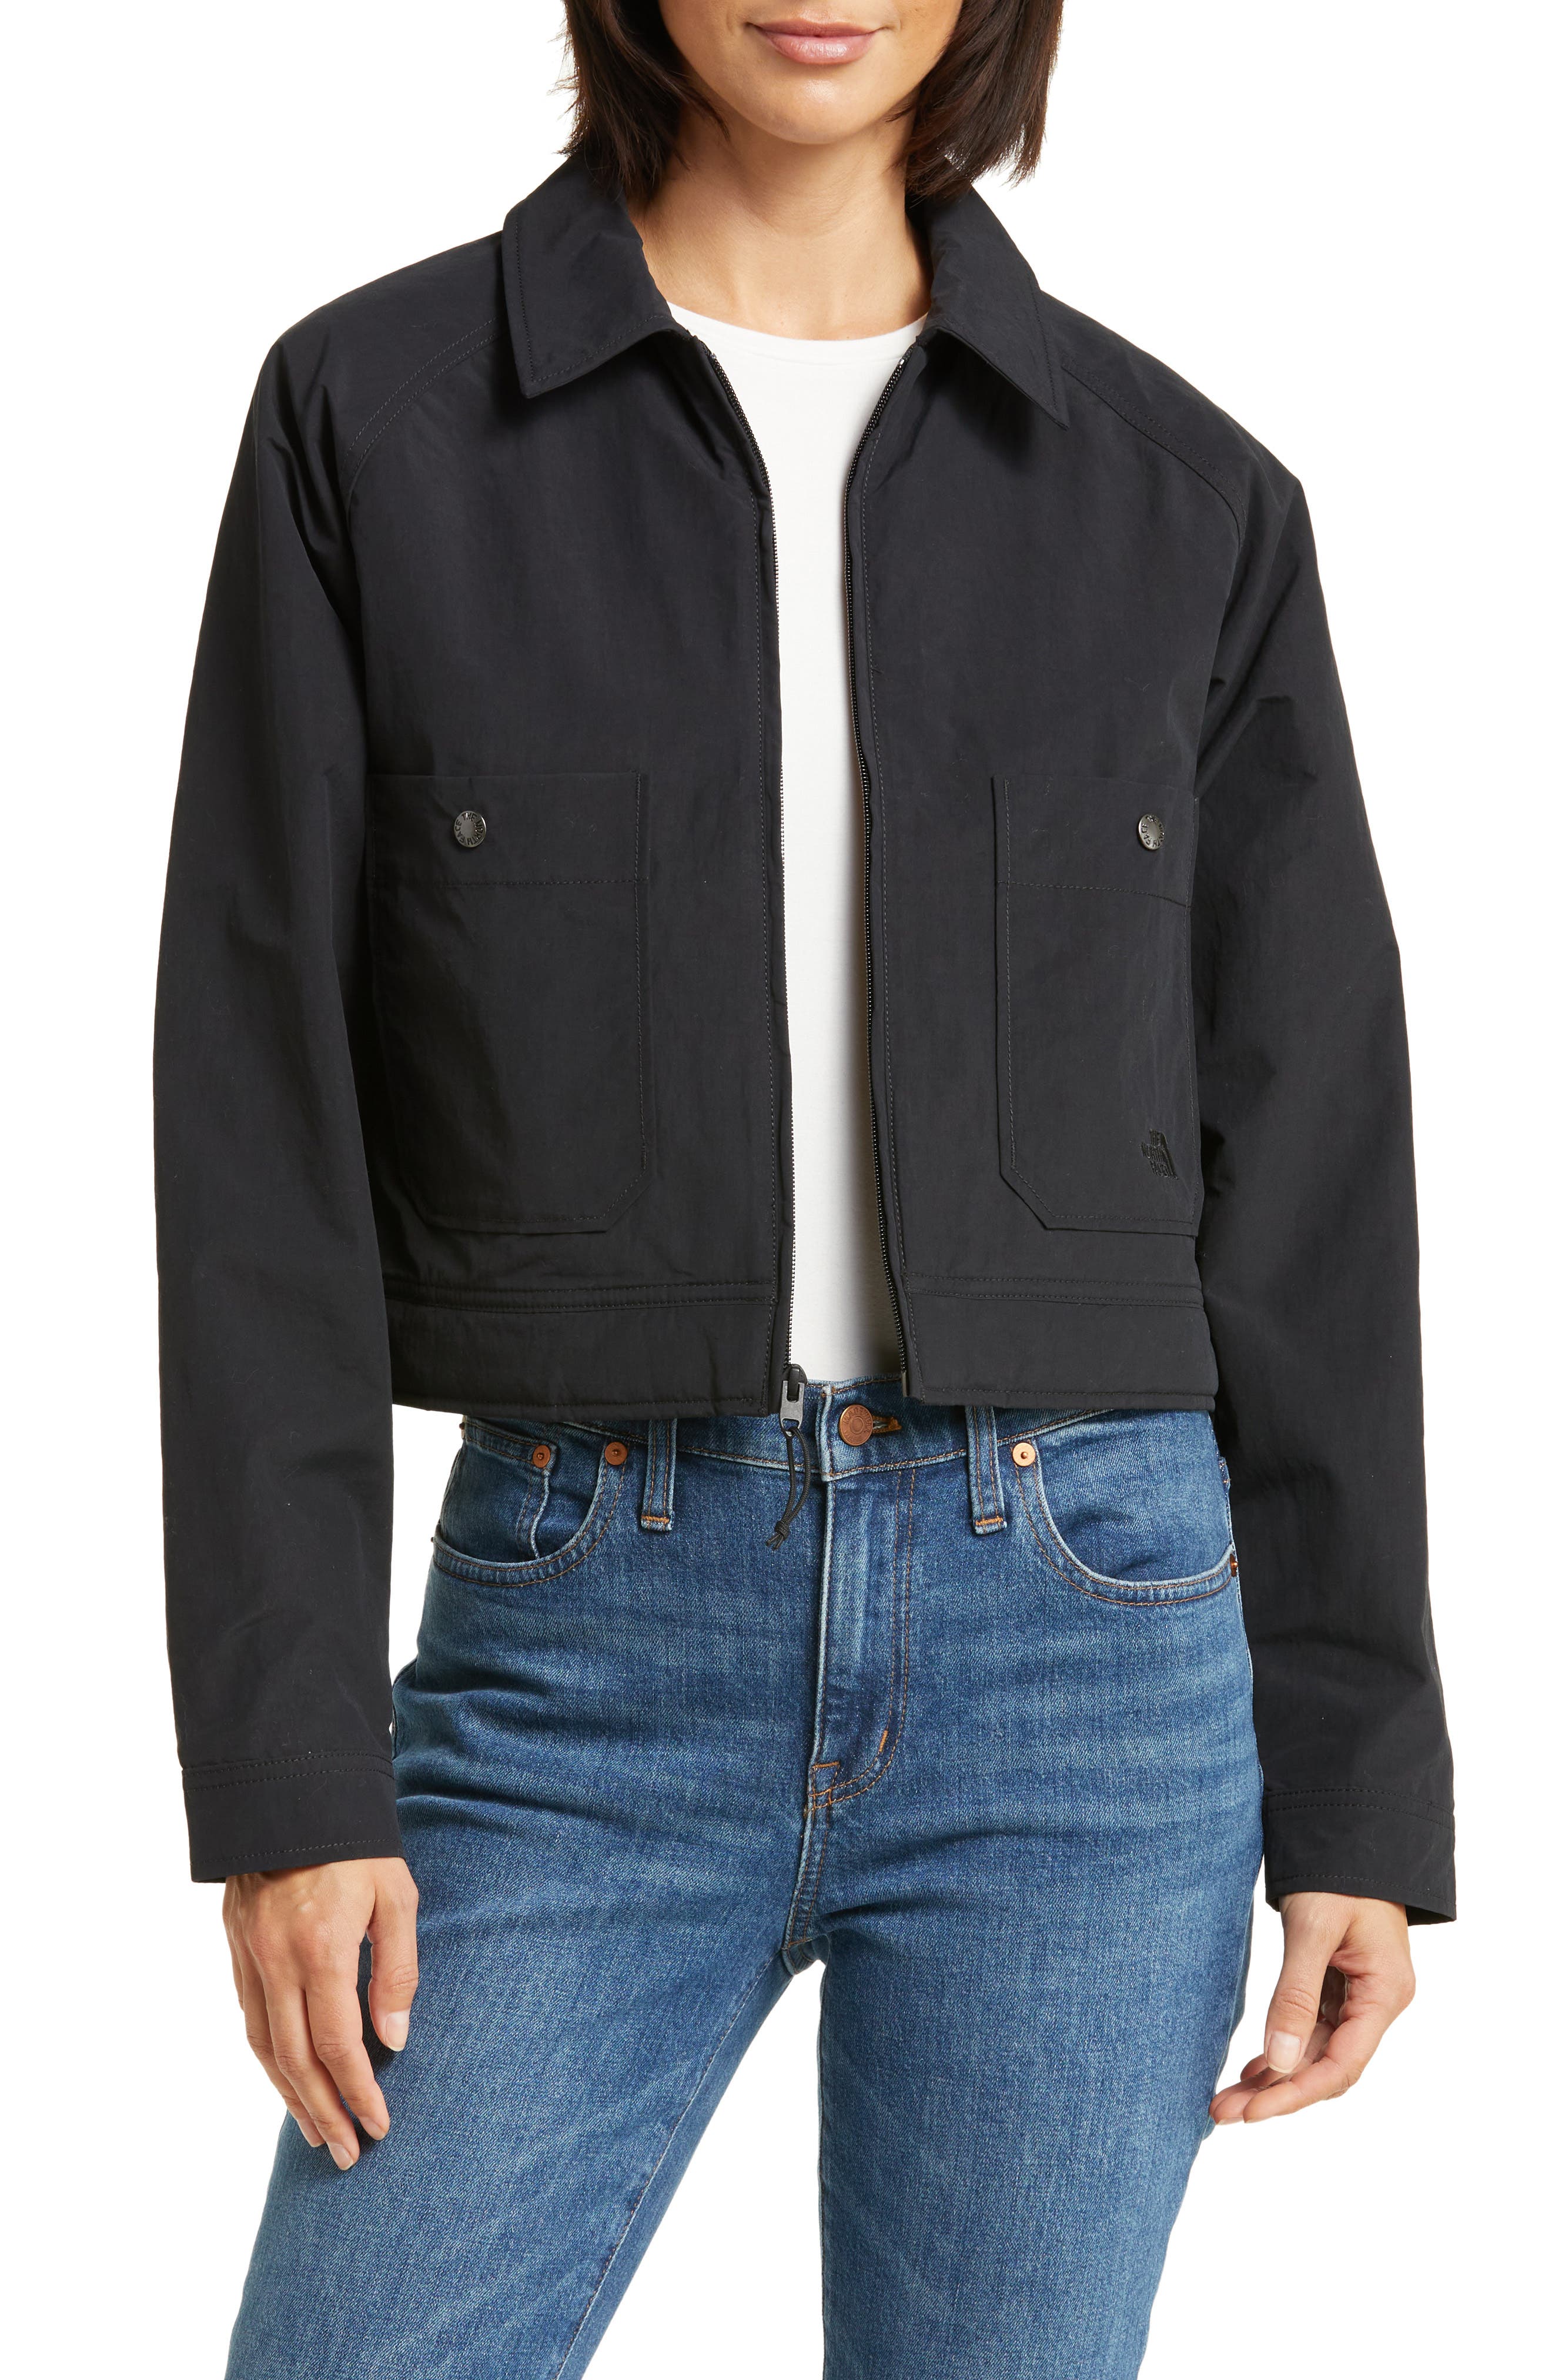 WOMEN FASHION Jackets Vest Oversize Beige/Gray S Pura vida vest discount 52% 